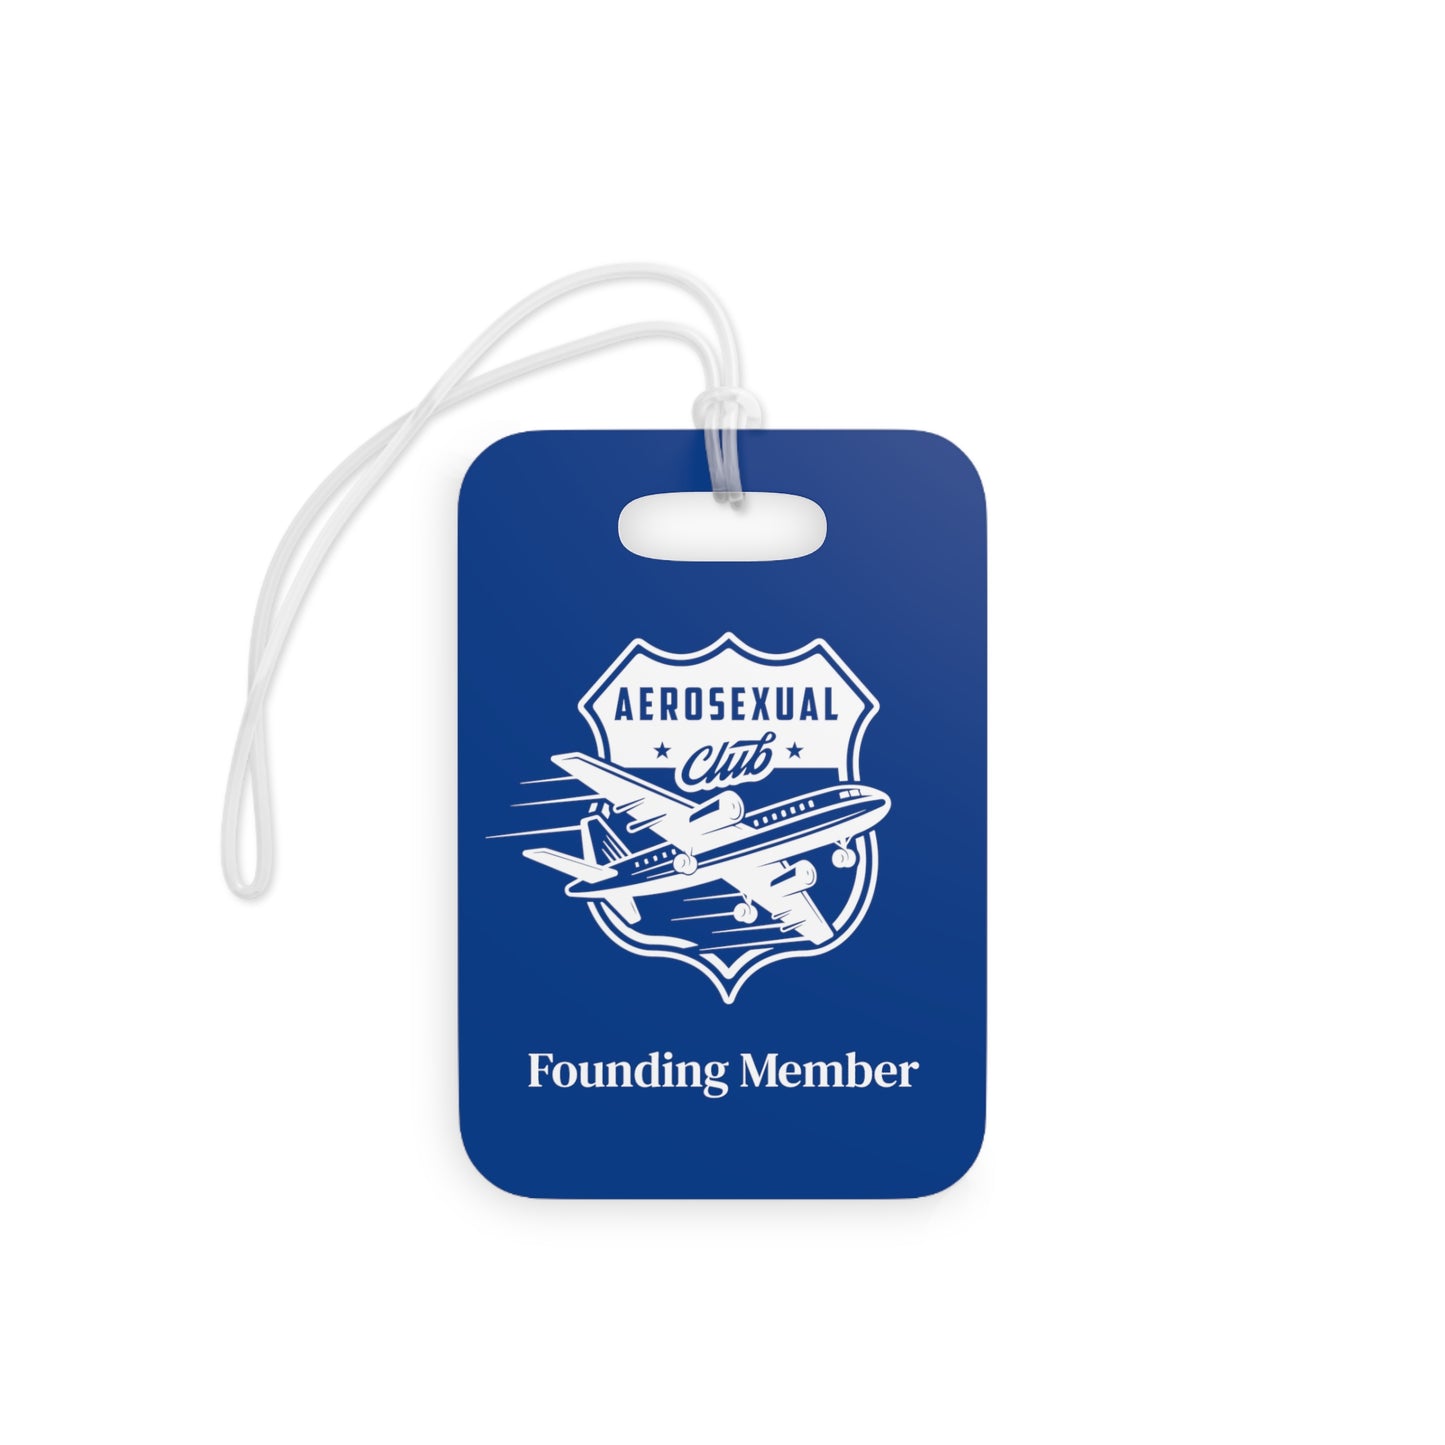 Aerosexual Club Founding Member Luggage Tag Blue (Limited Edition)